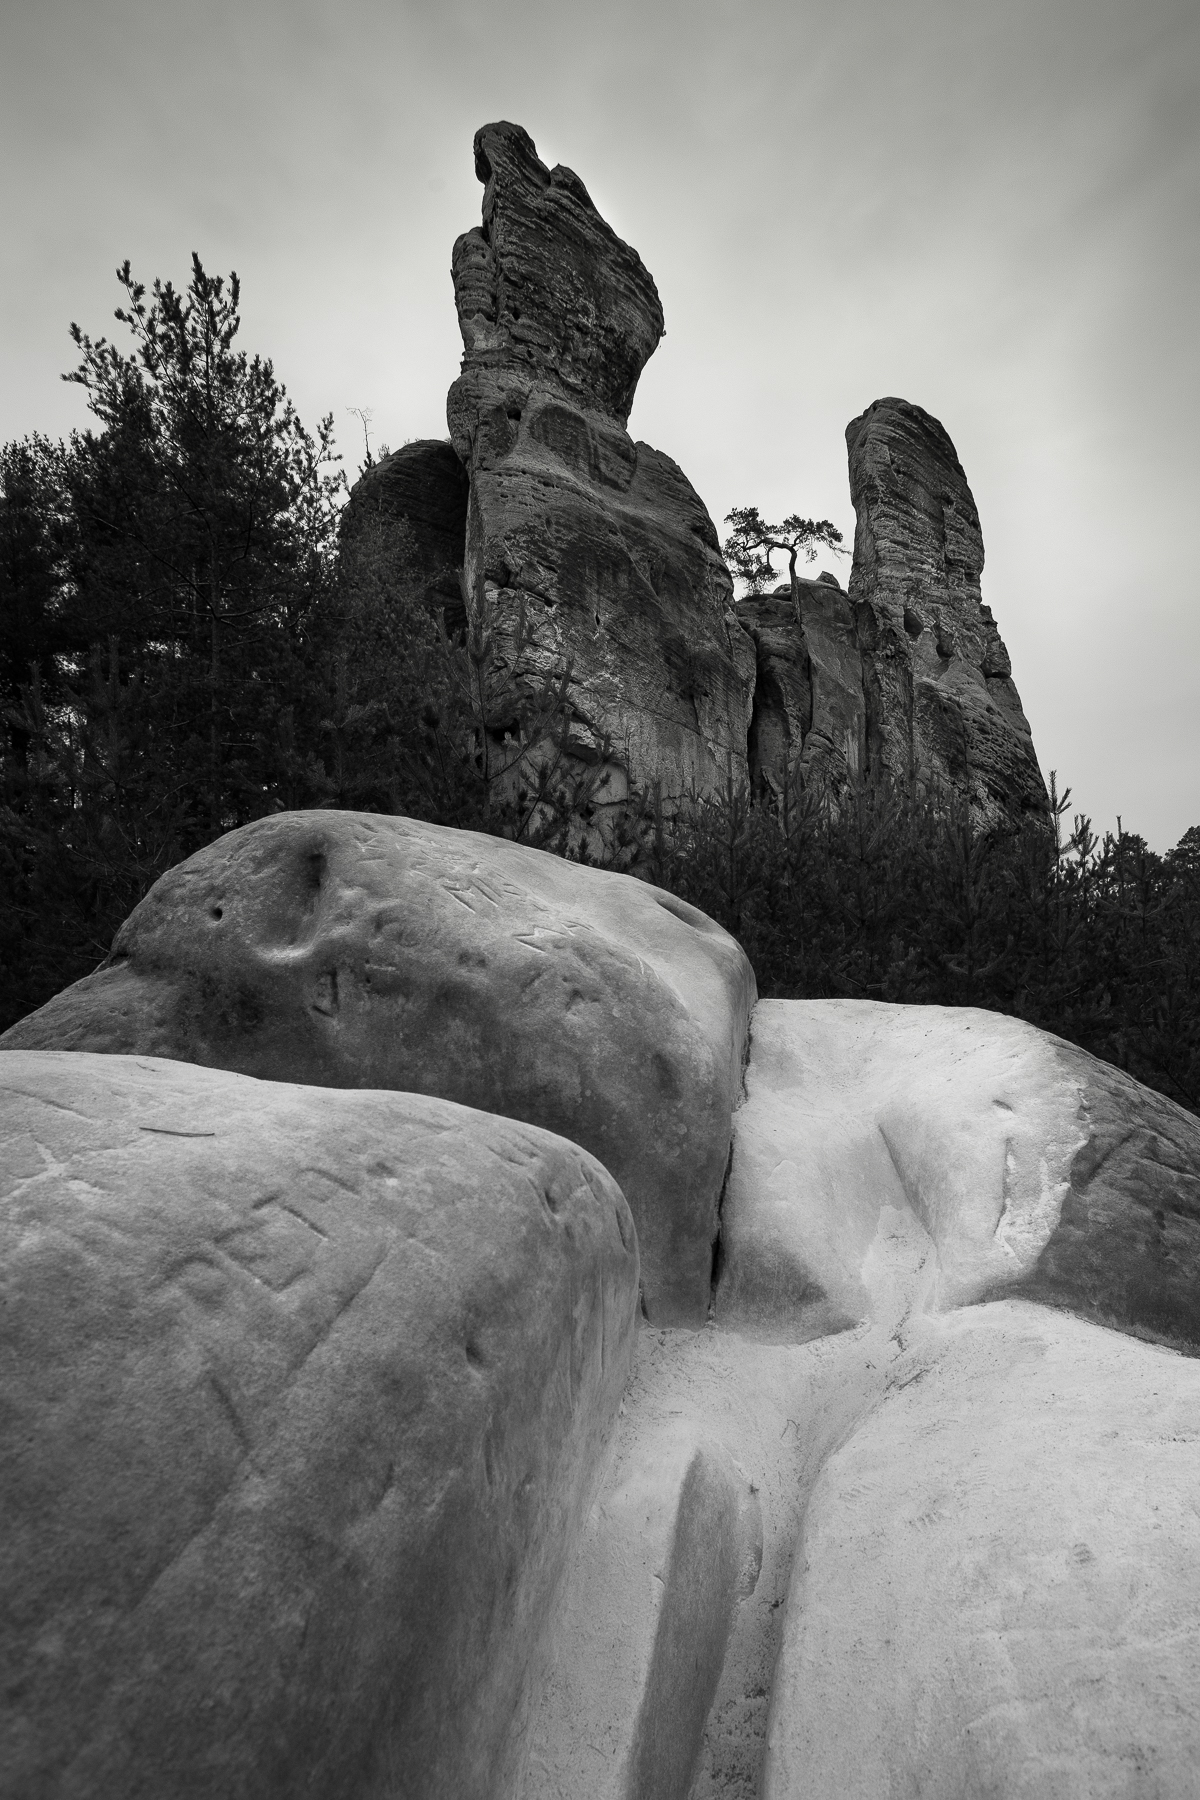 Hruba Skala monolithic rocks. Photo taken during winter photo workshop in Bohemia.